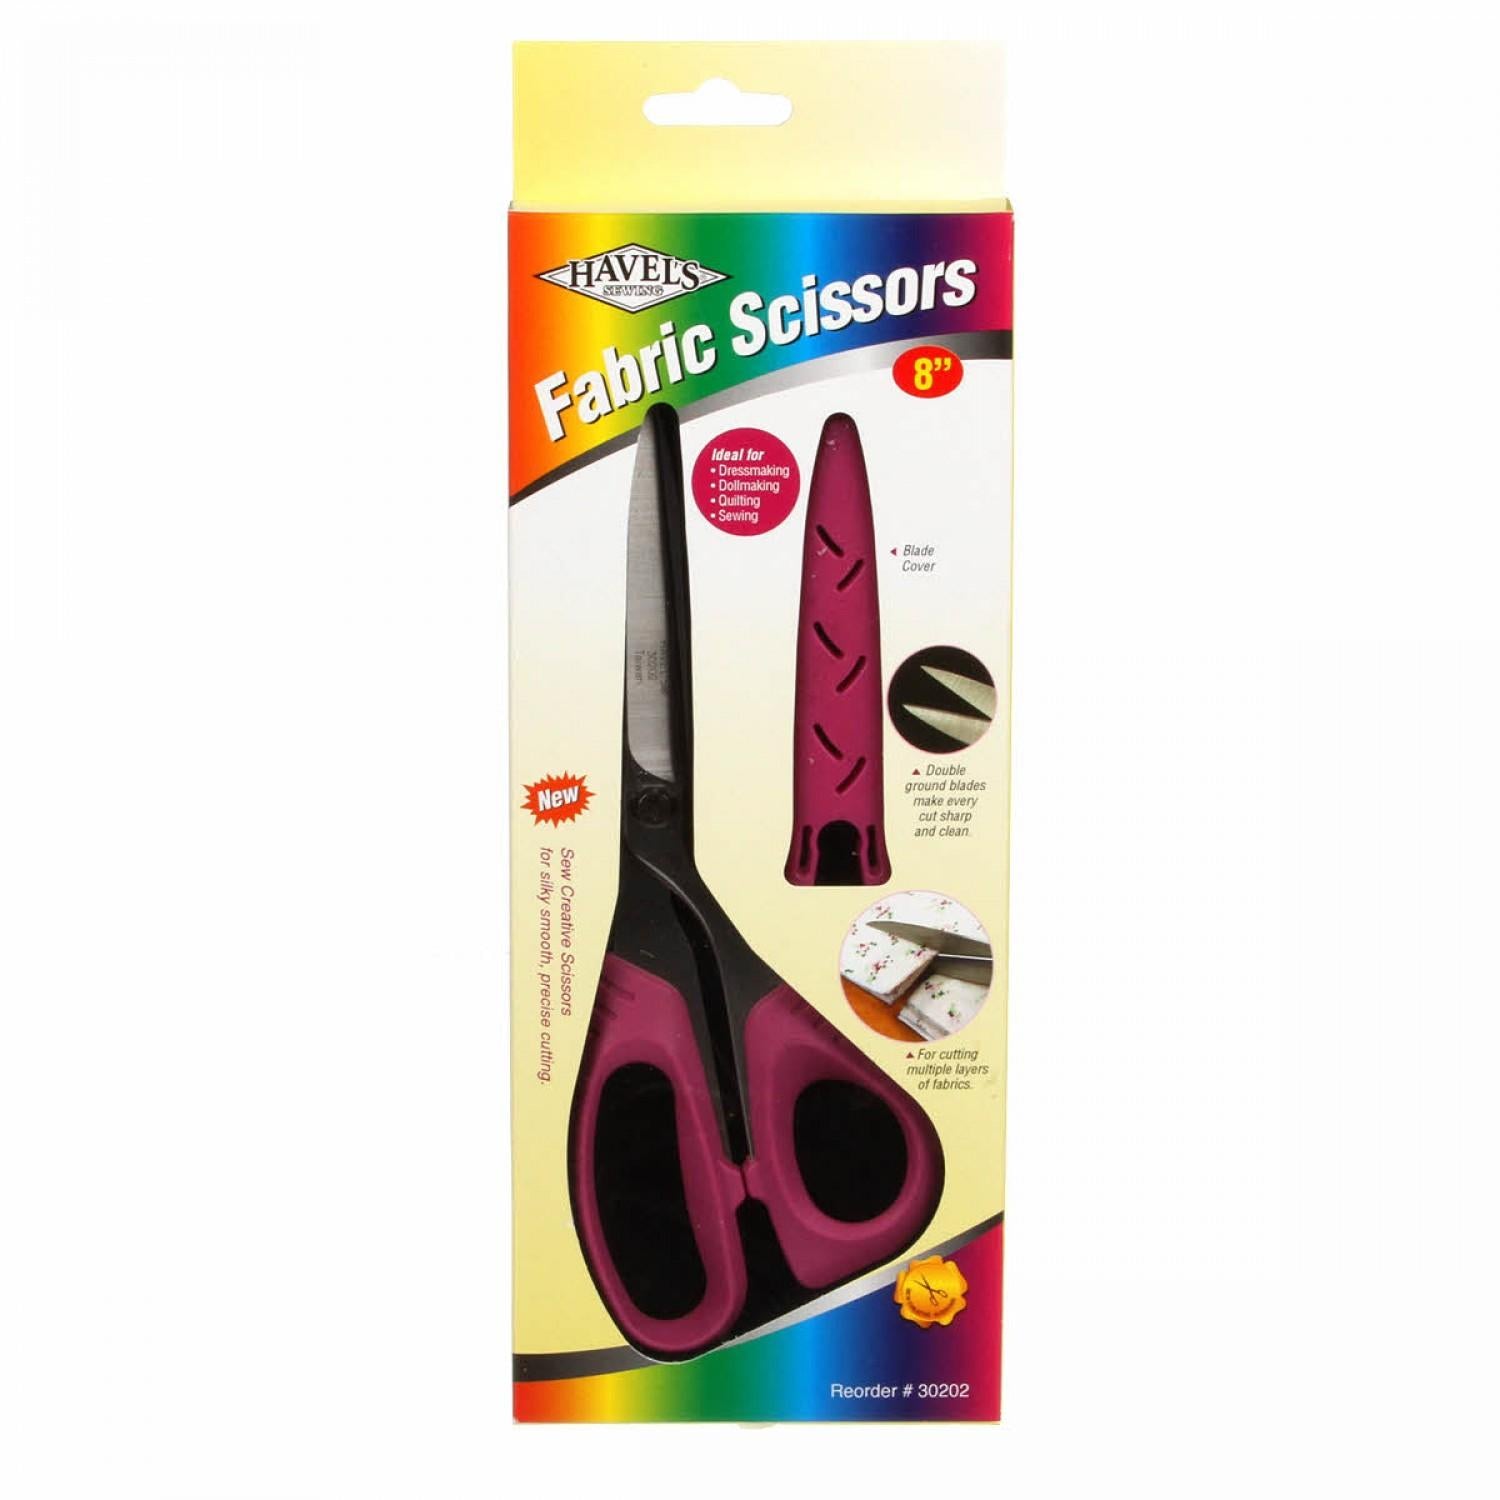 Sewing Scissor 8in